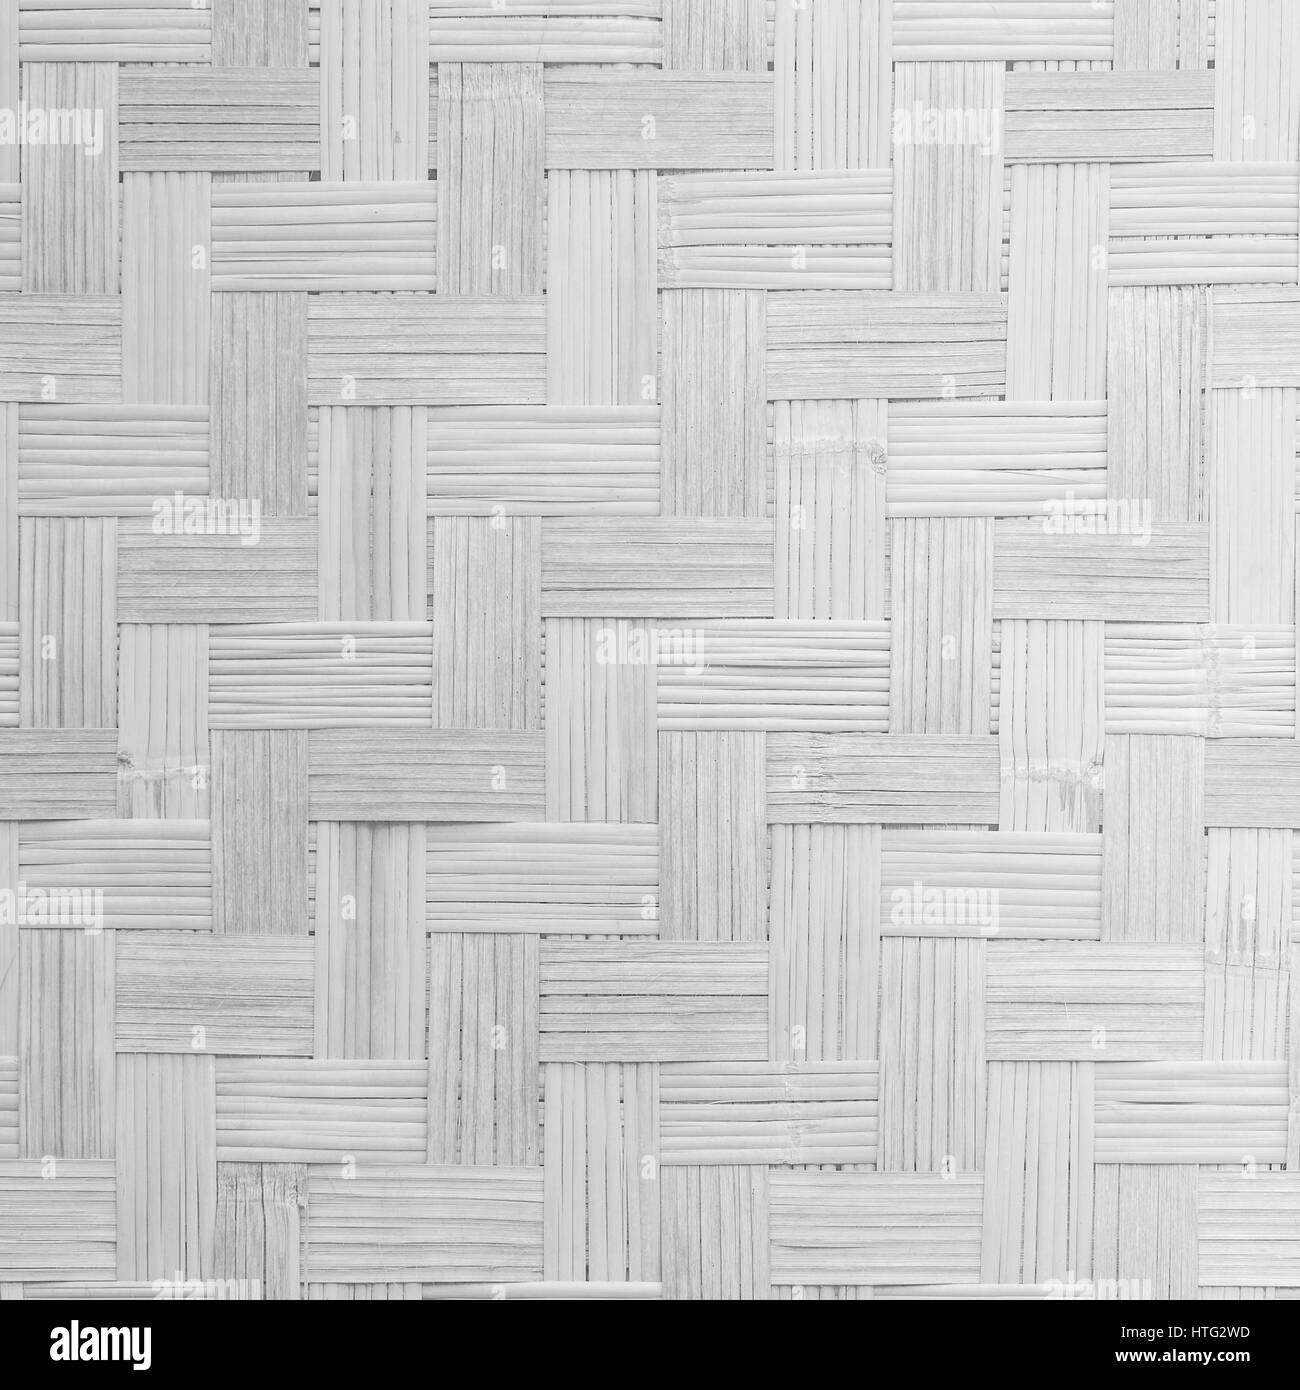 White background of bamboo texture Stock Photo